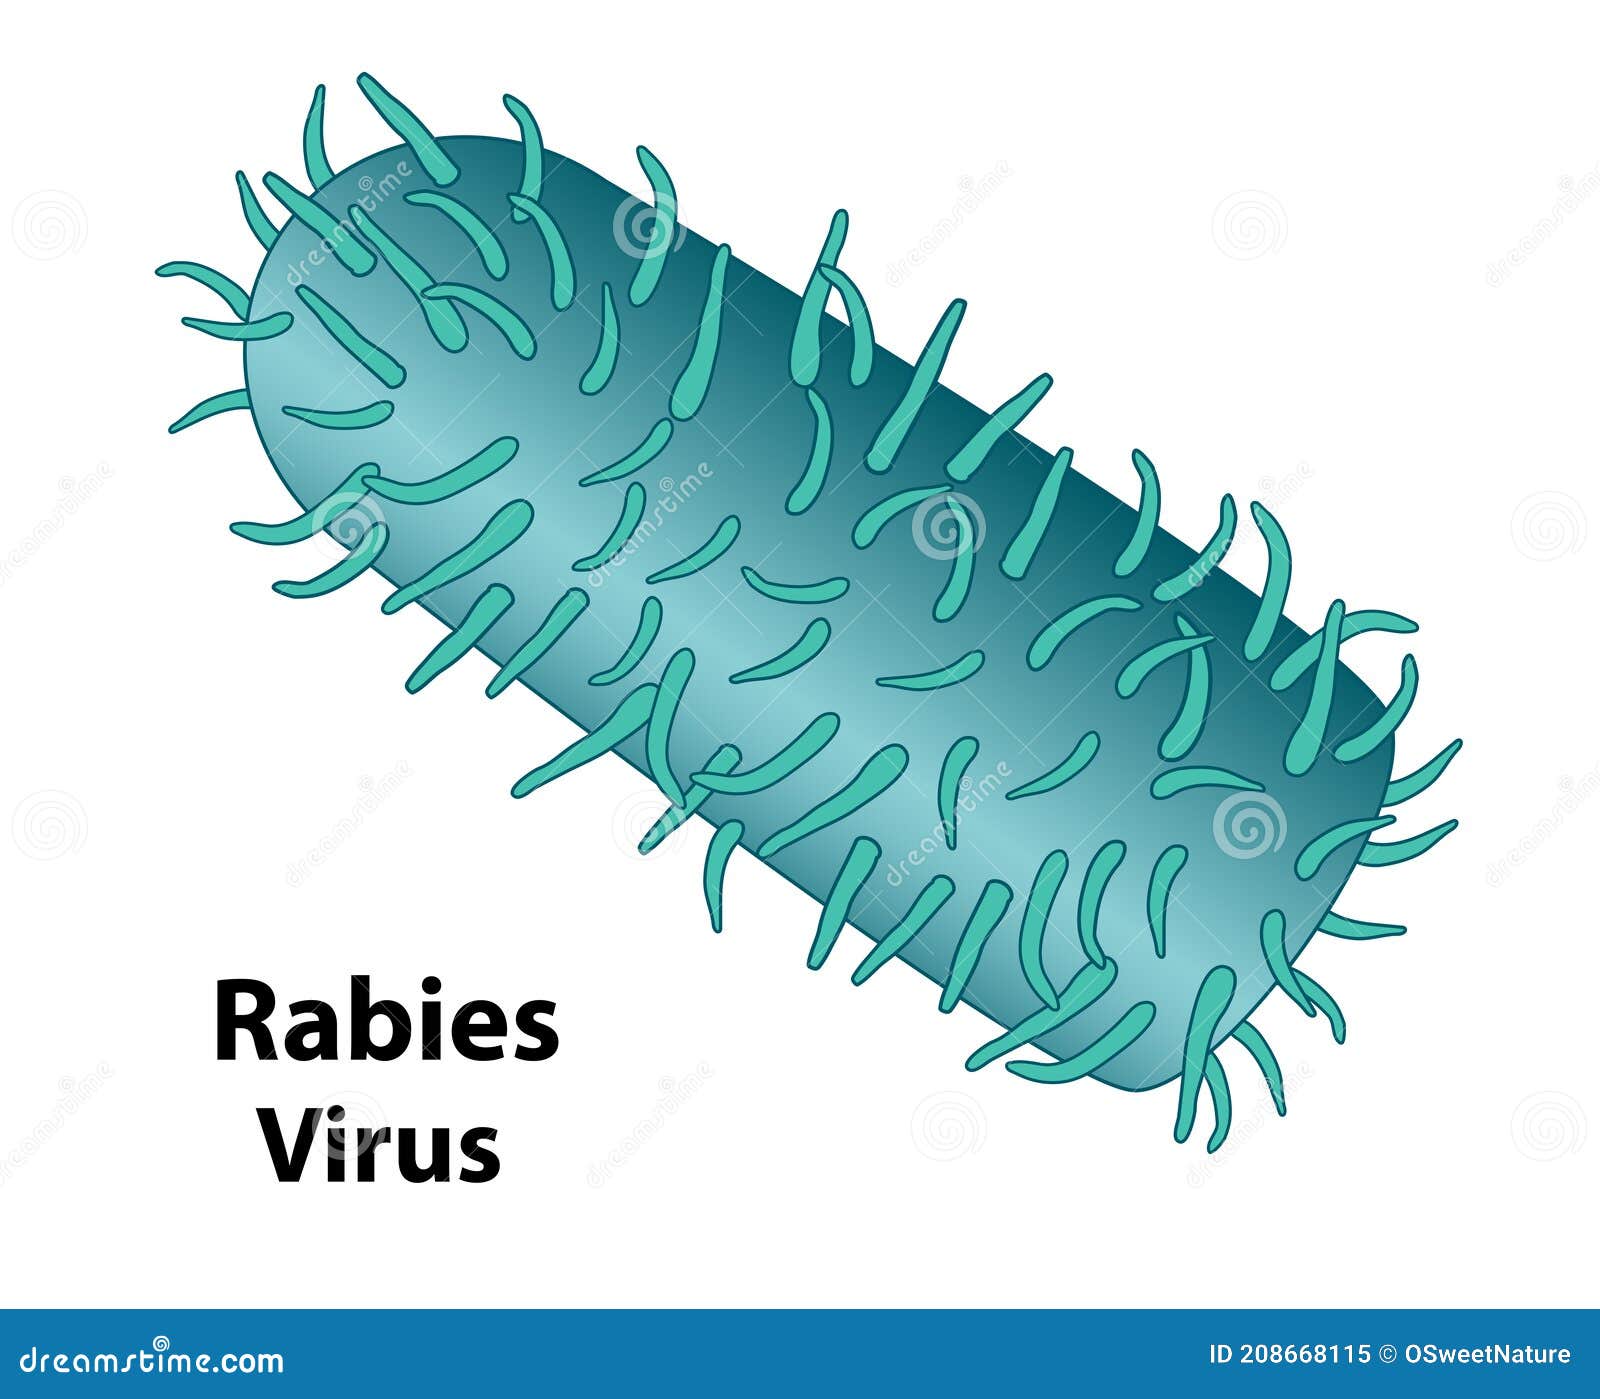 rabies external feature of the virus